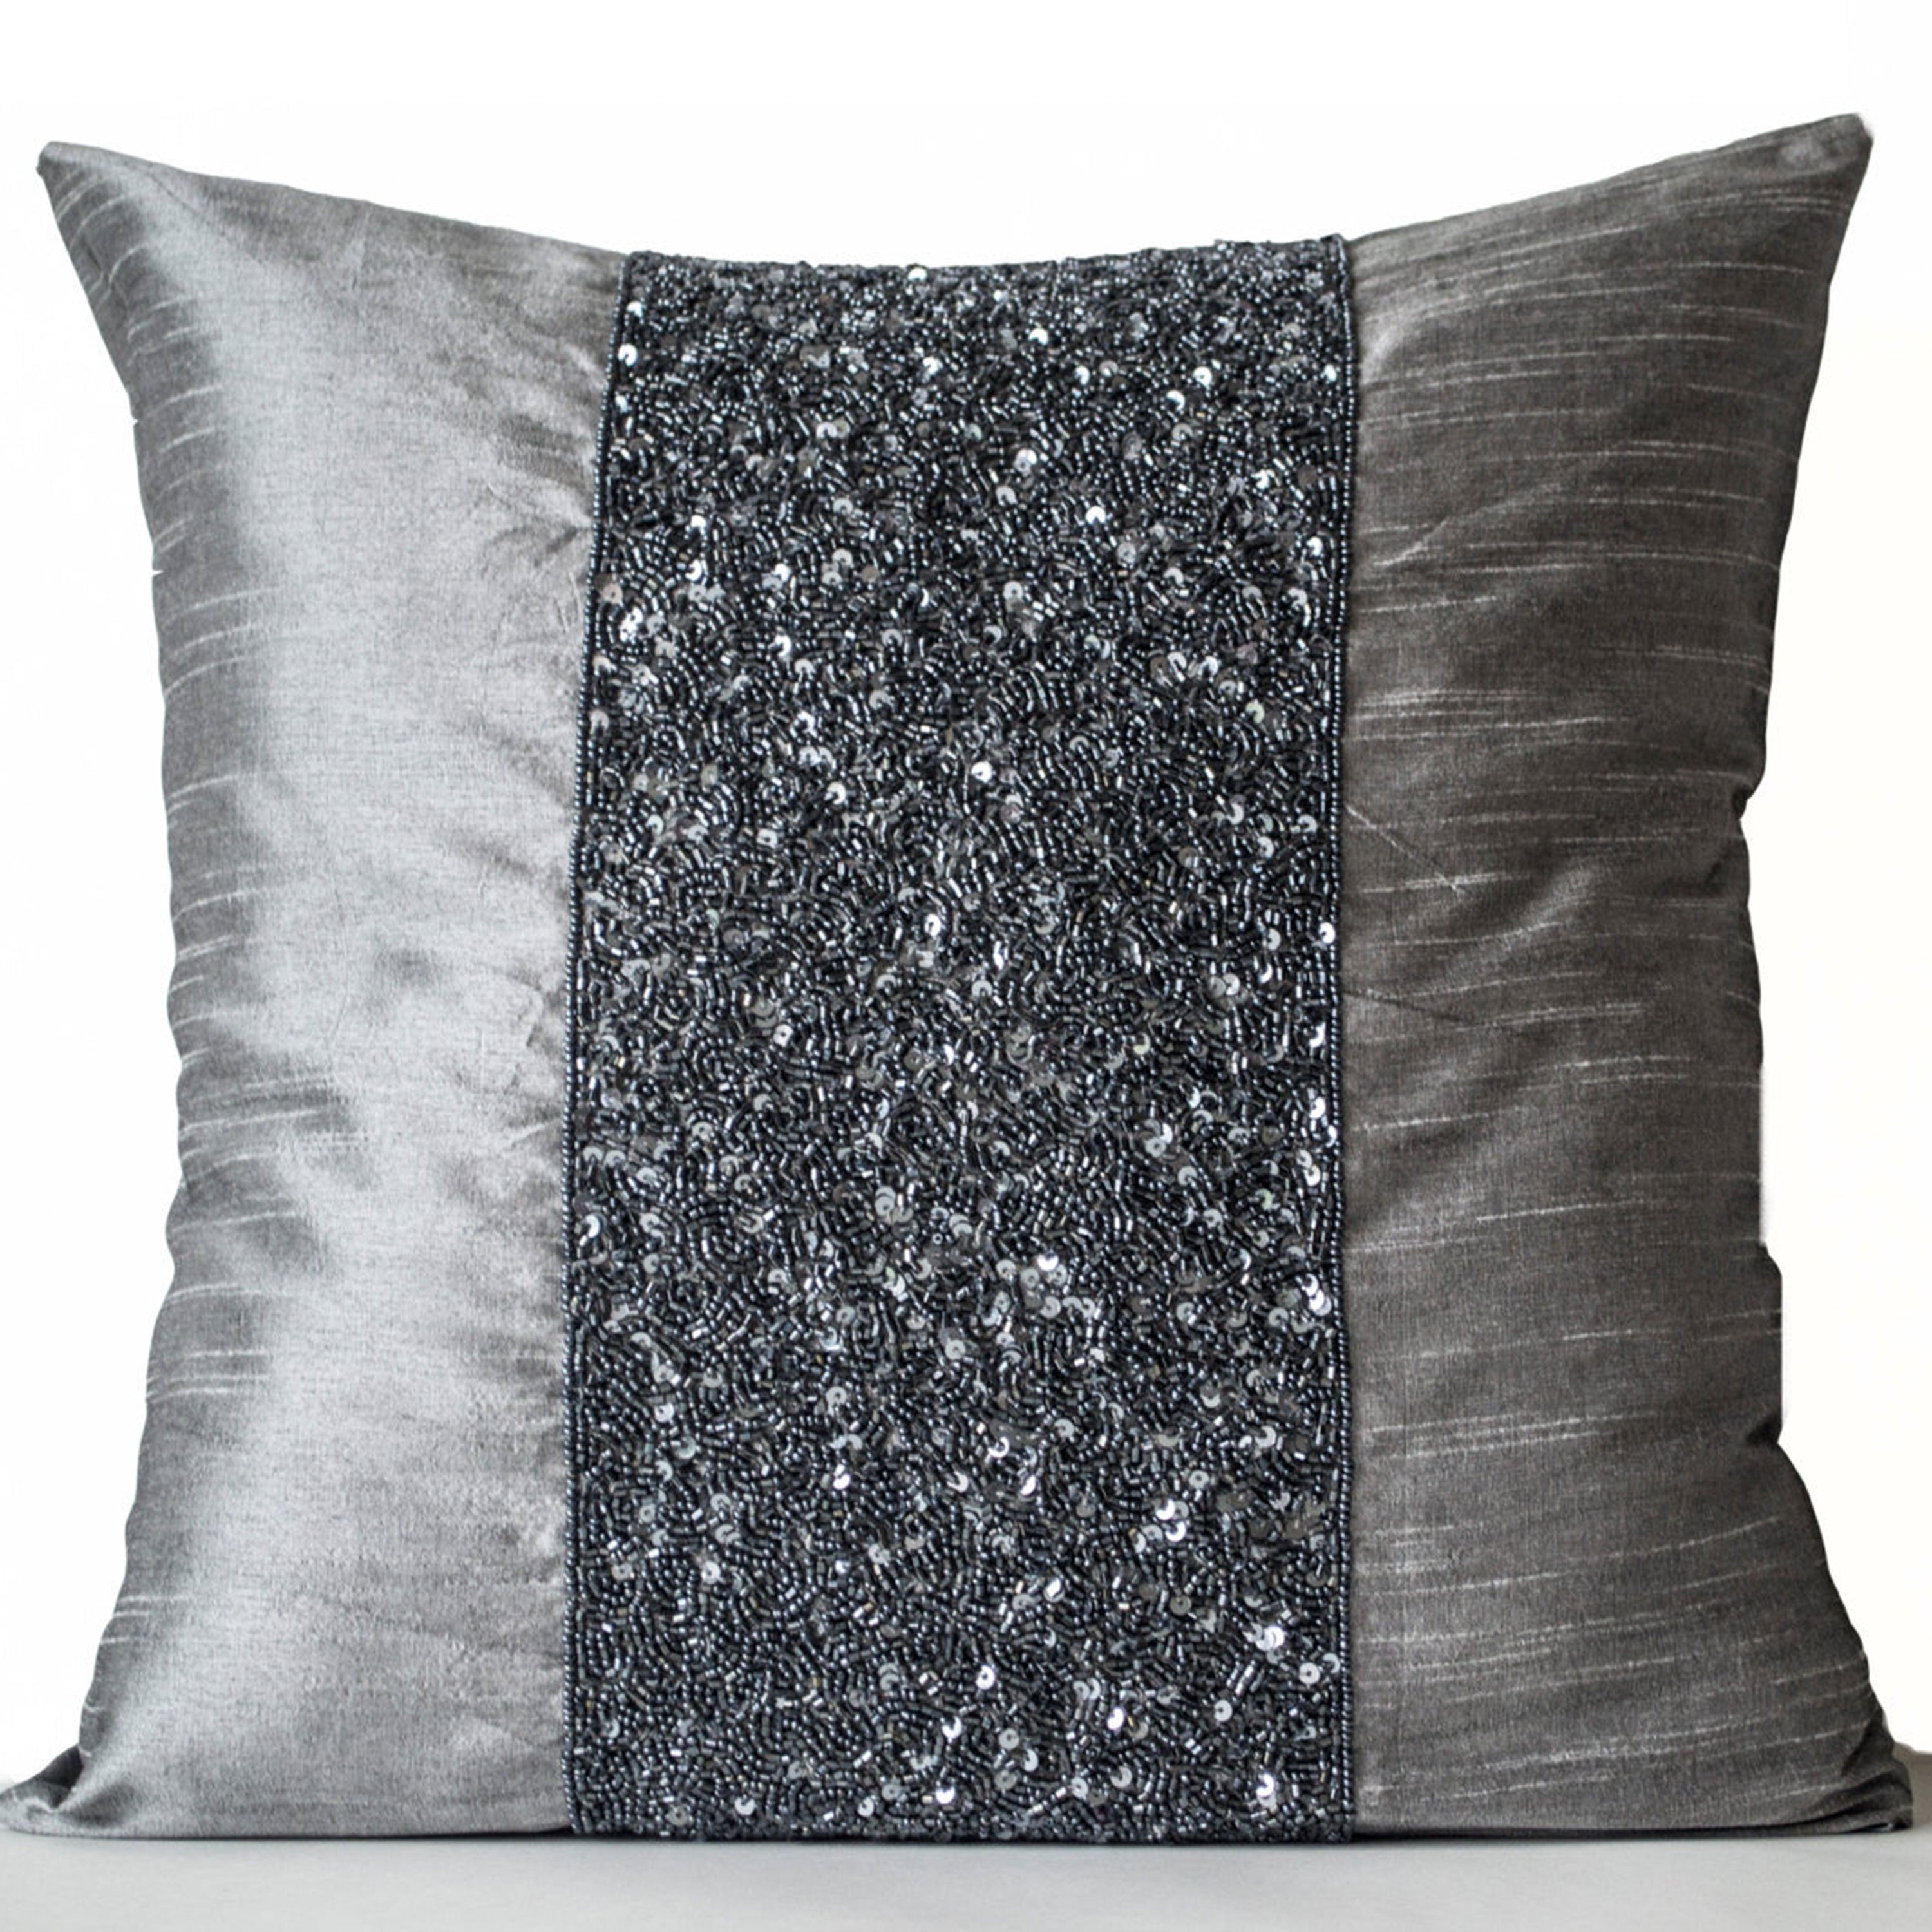 Grey beaded Pillows -Grey Silk Metallic Pillow cover -Sparkle Pillow -Gray Beads Embroidered Pillow -16x16 -Gift -Beaded Cushions -Grey Bead